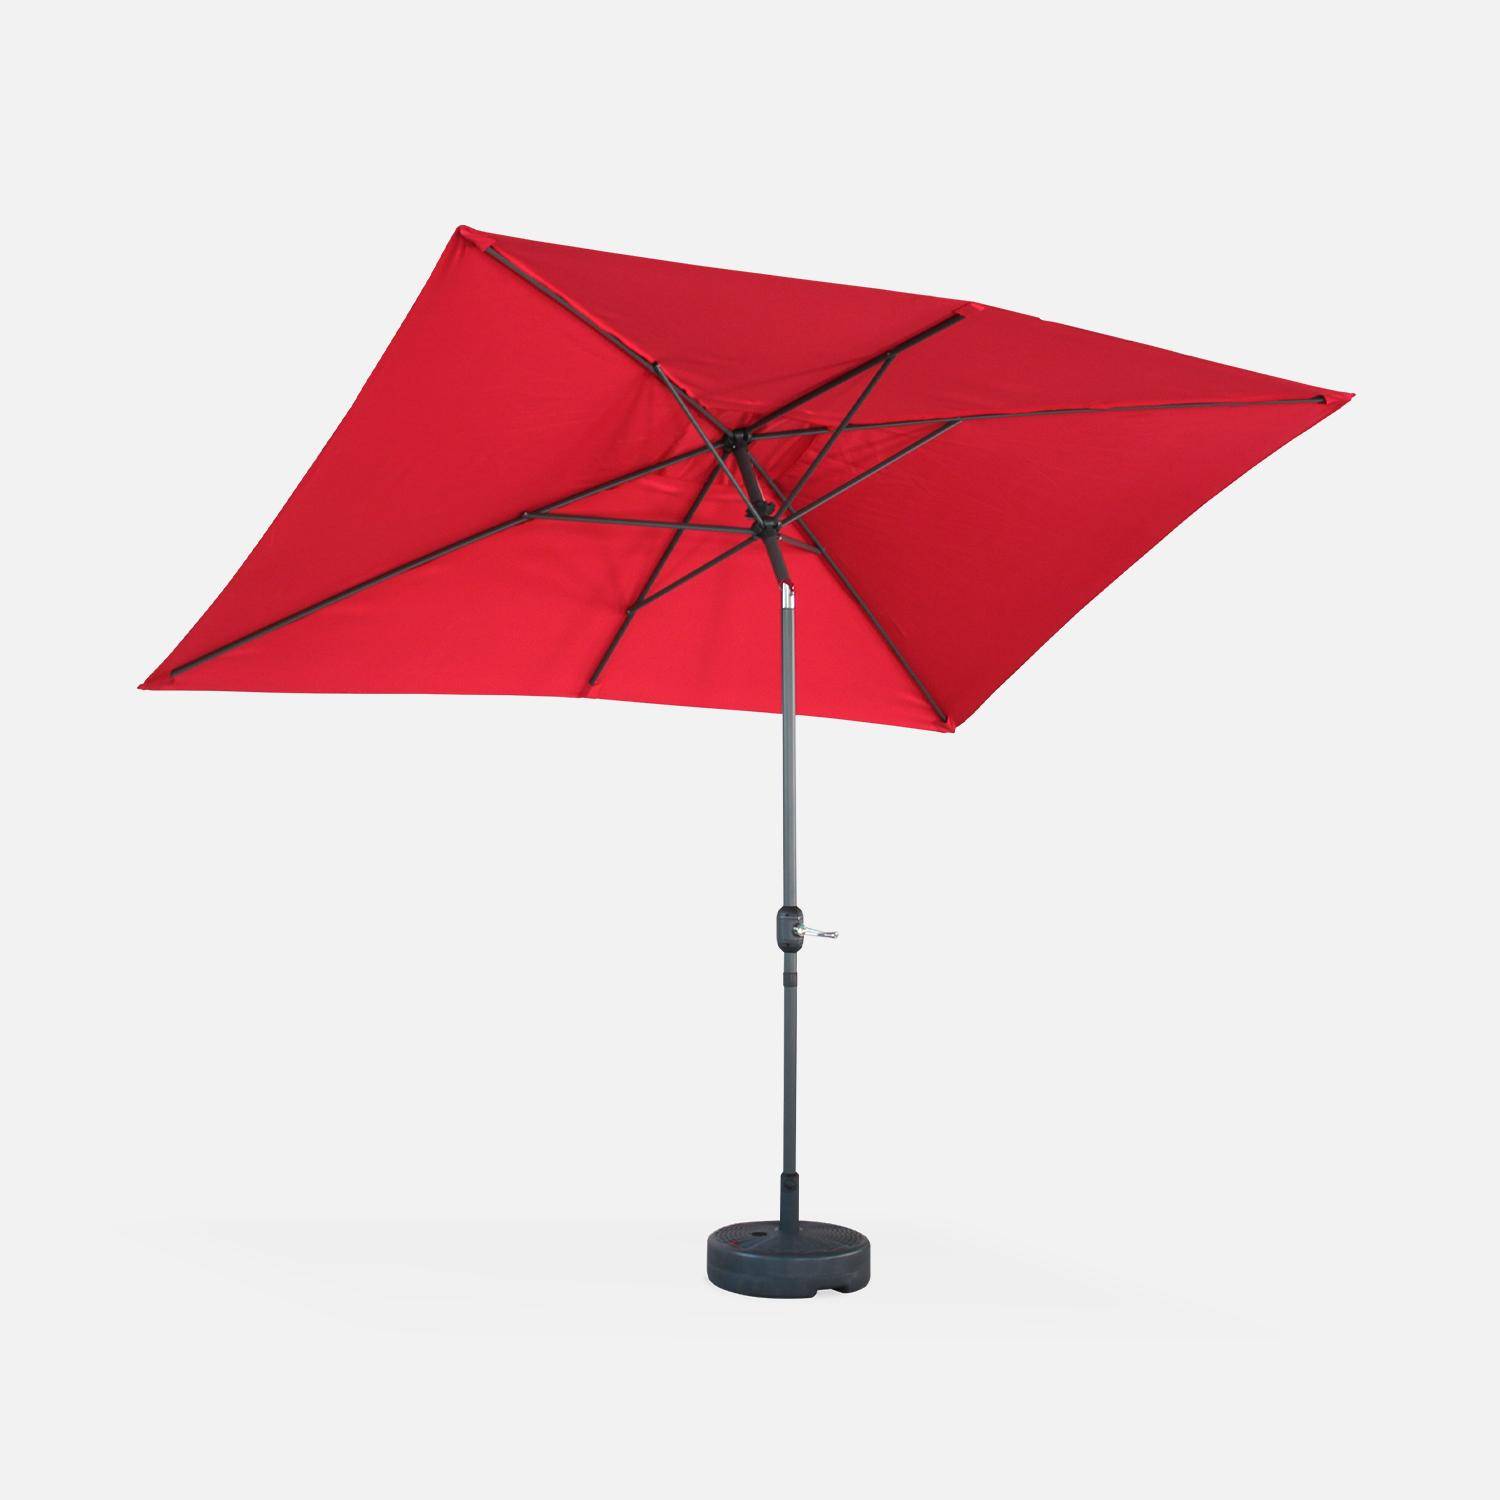 Sombrilla jardin, parasol rojo, mástil central, inclinable, rectangular, 2x3m, Touquet Photo3